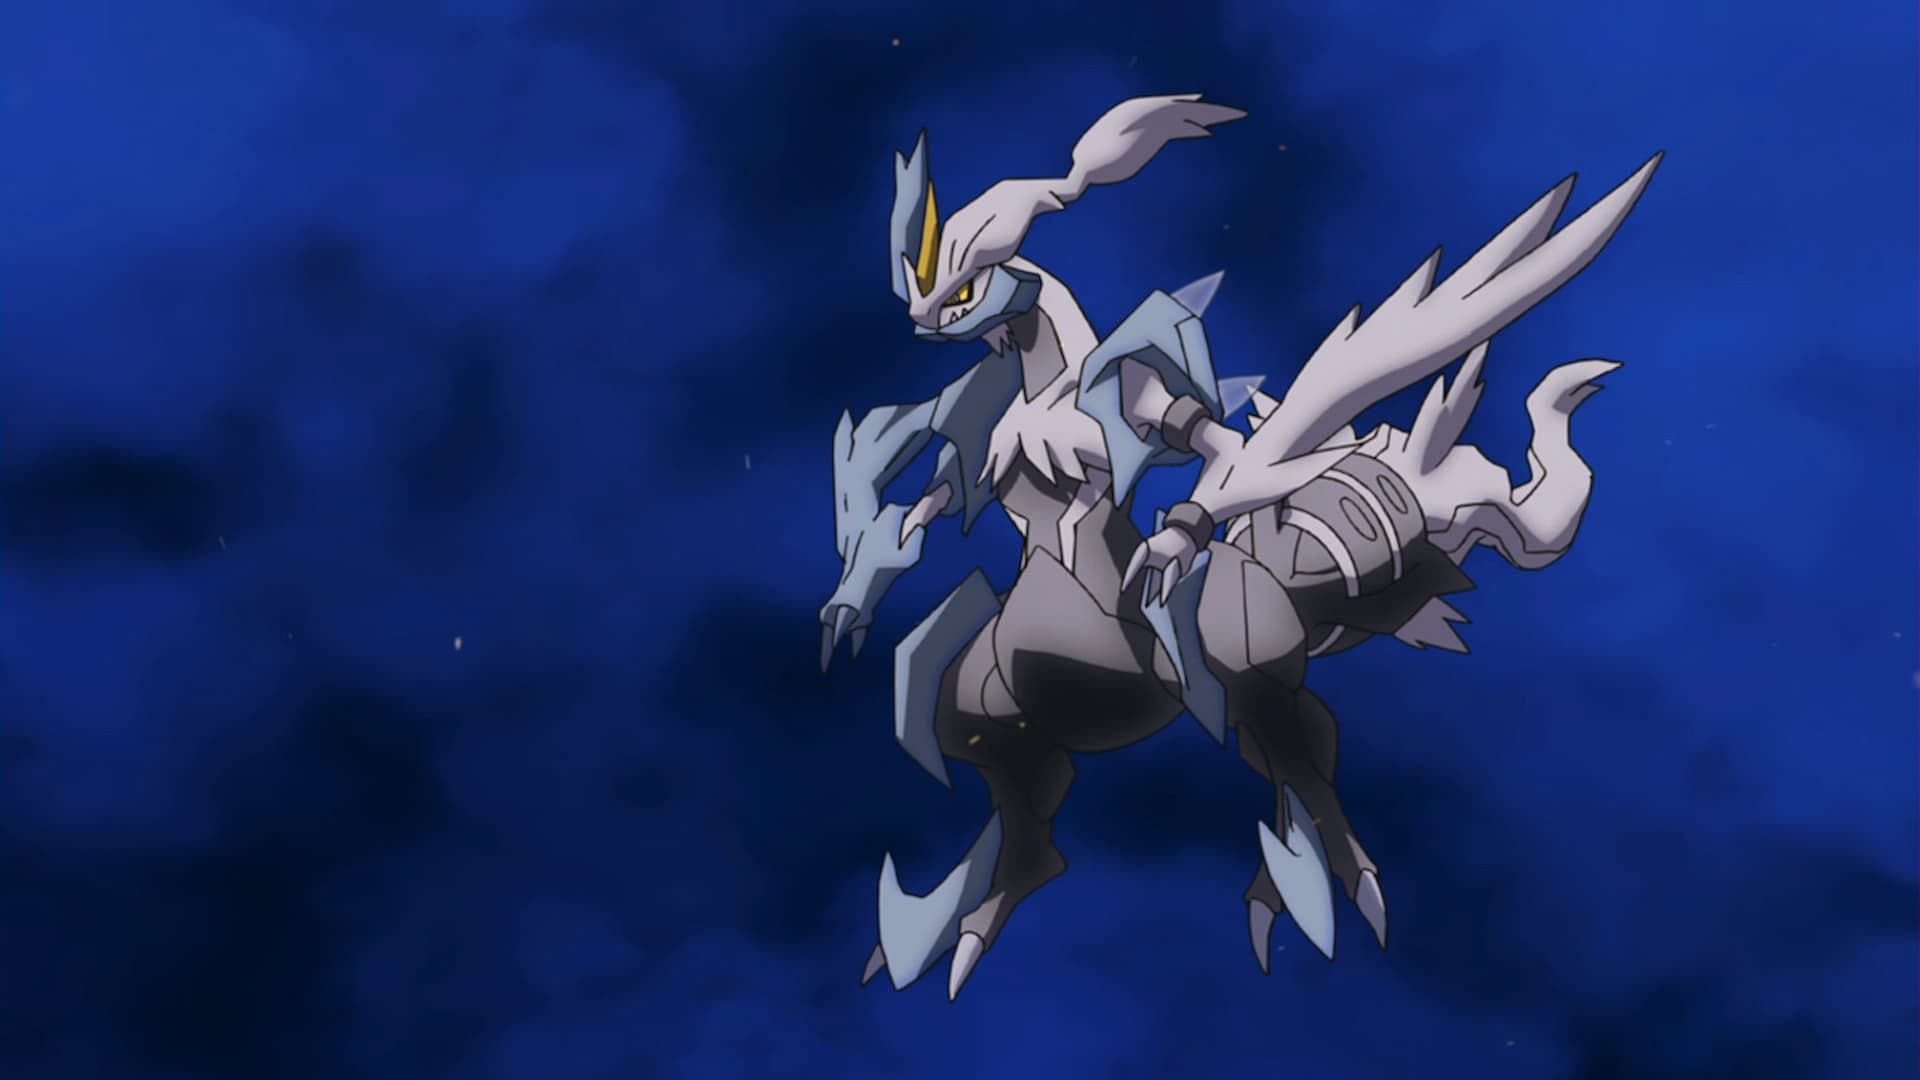 Kyurem bianco come visto nell'anime (immagine tramite The Pokemon Company)